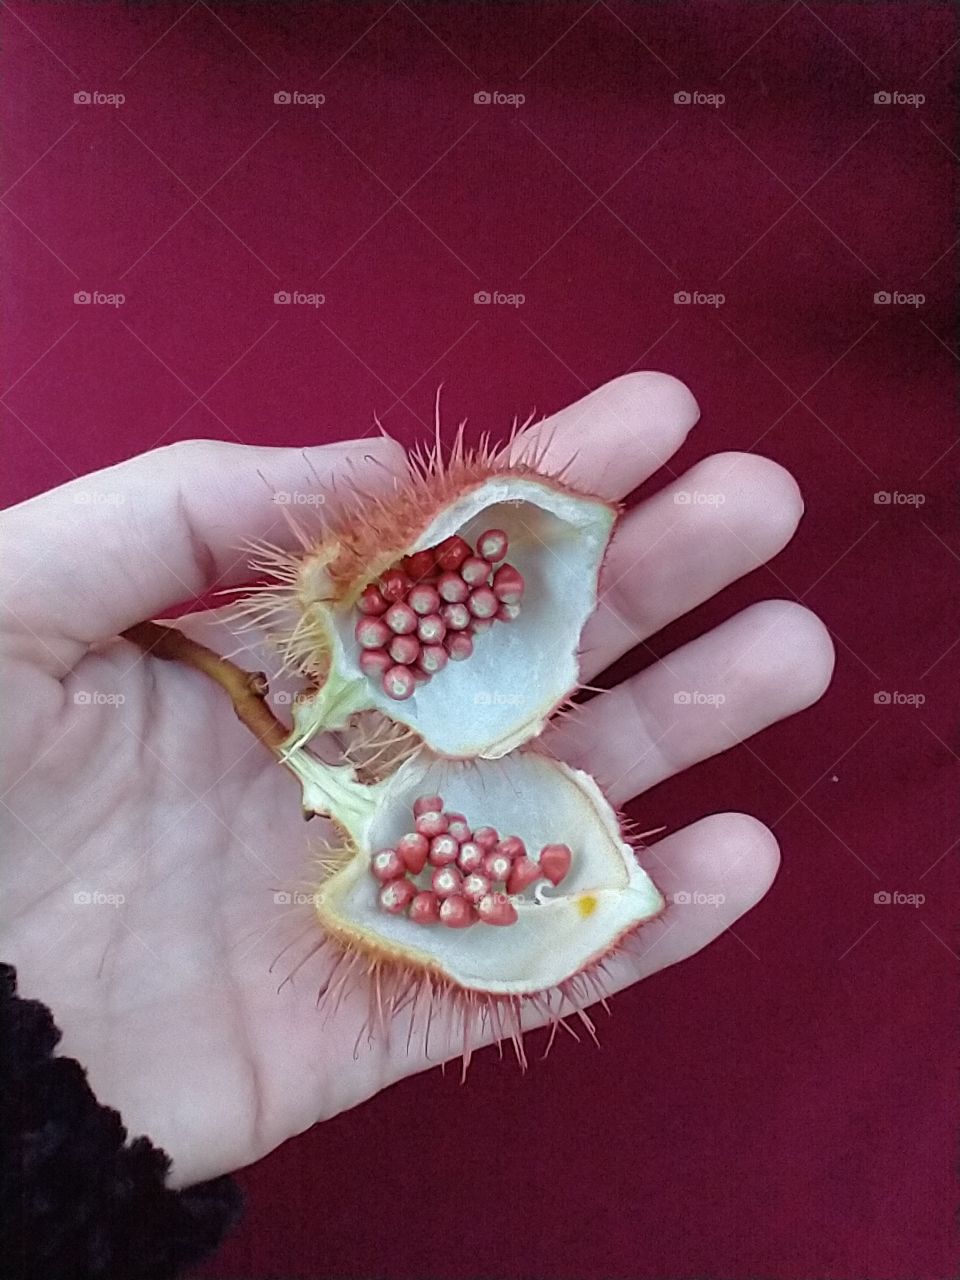 Fruits from Brazil - Urucum